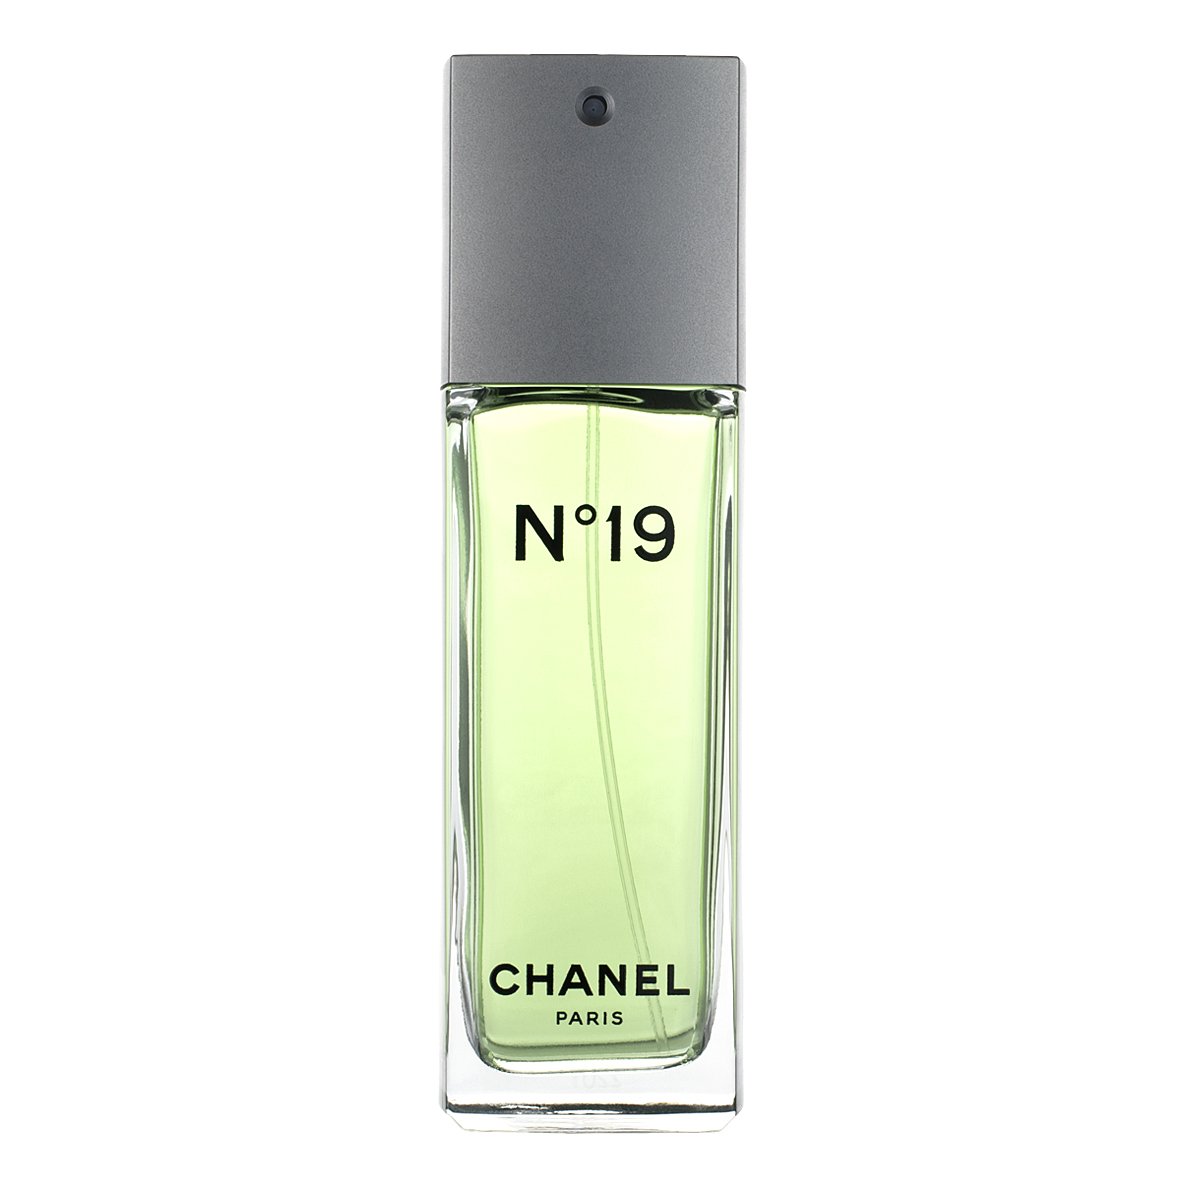 Chanel No. 19 Eau de Toilette Spray 100ml